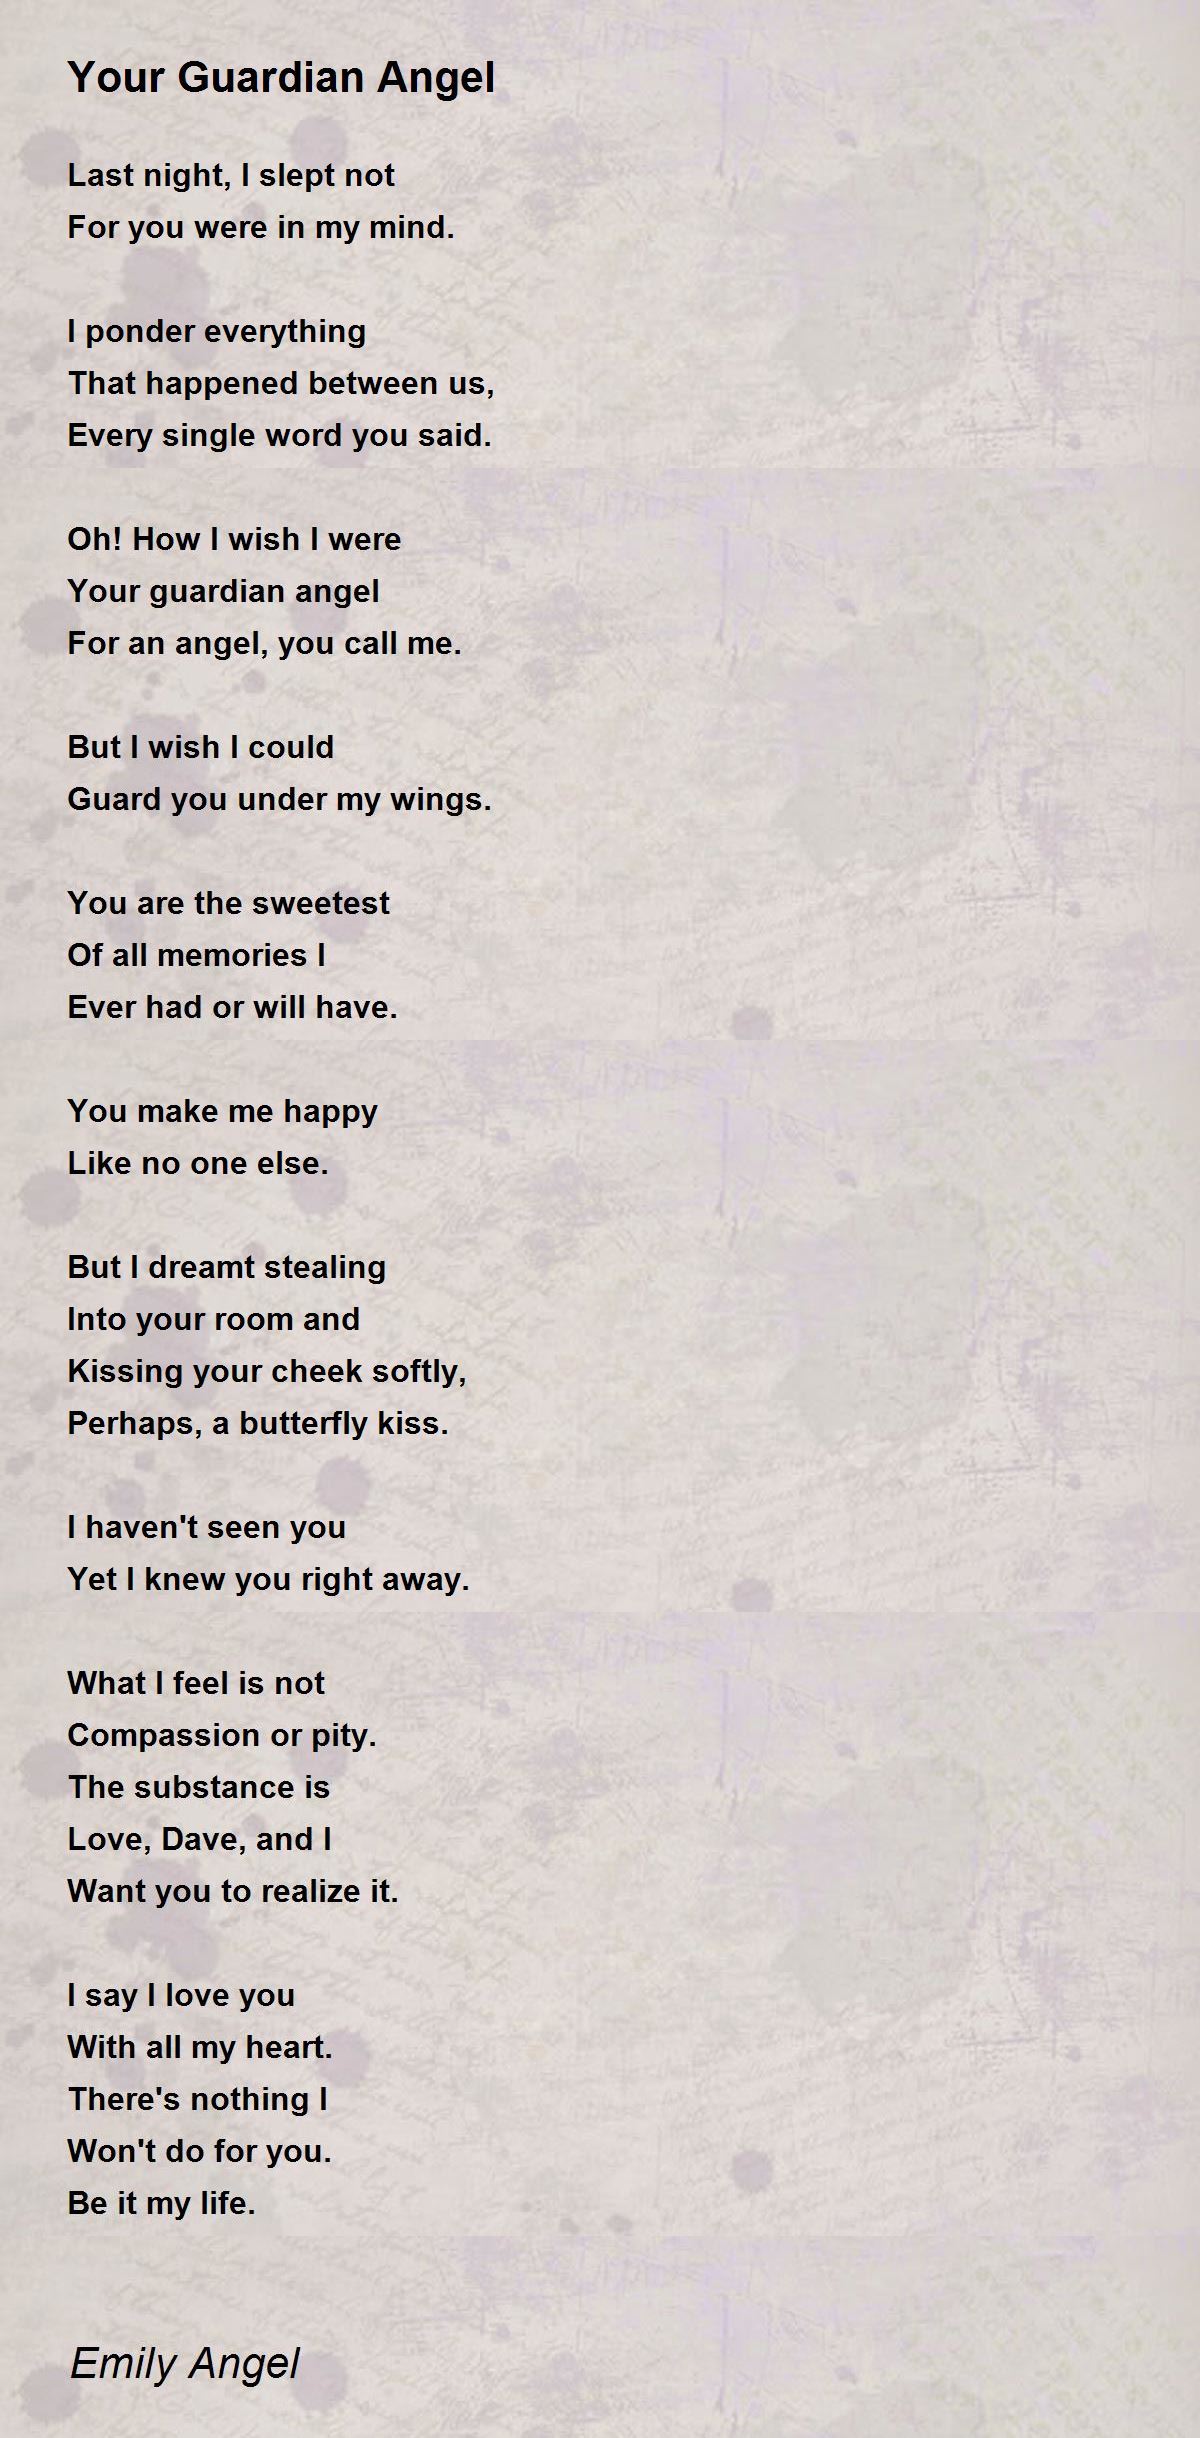 Your Guardian Angel Poem by Emily Angel - Poem Hunter